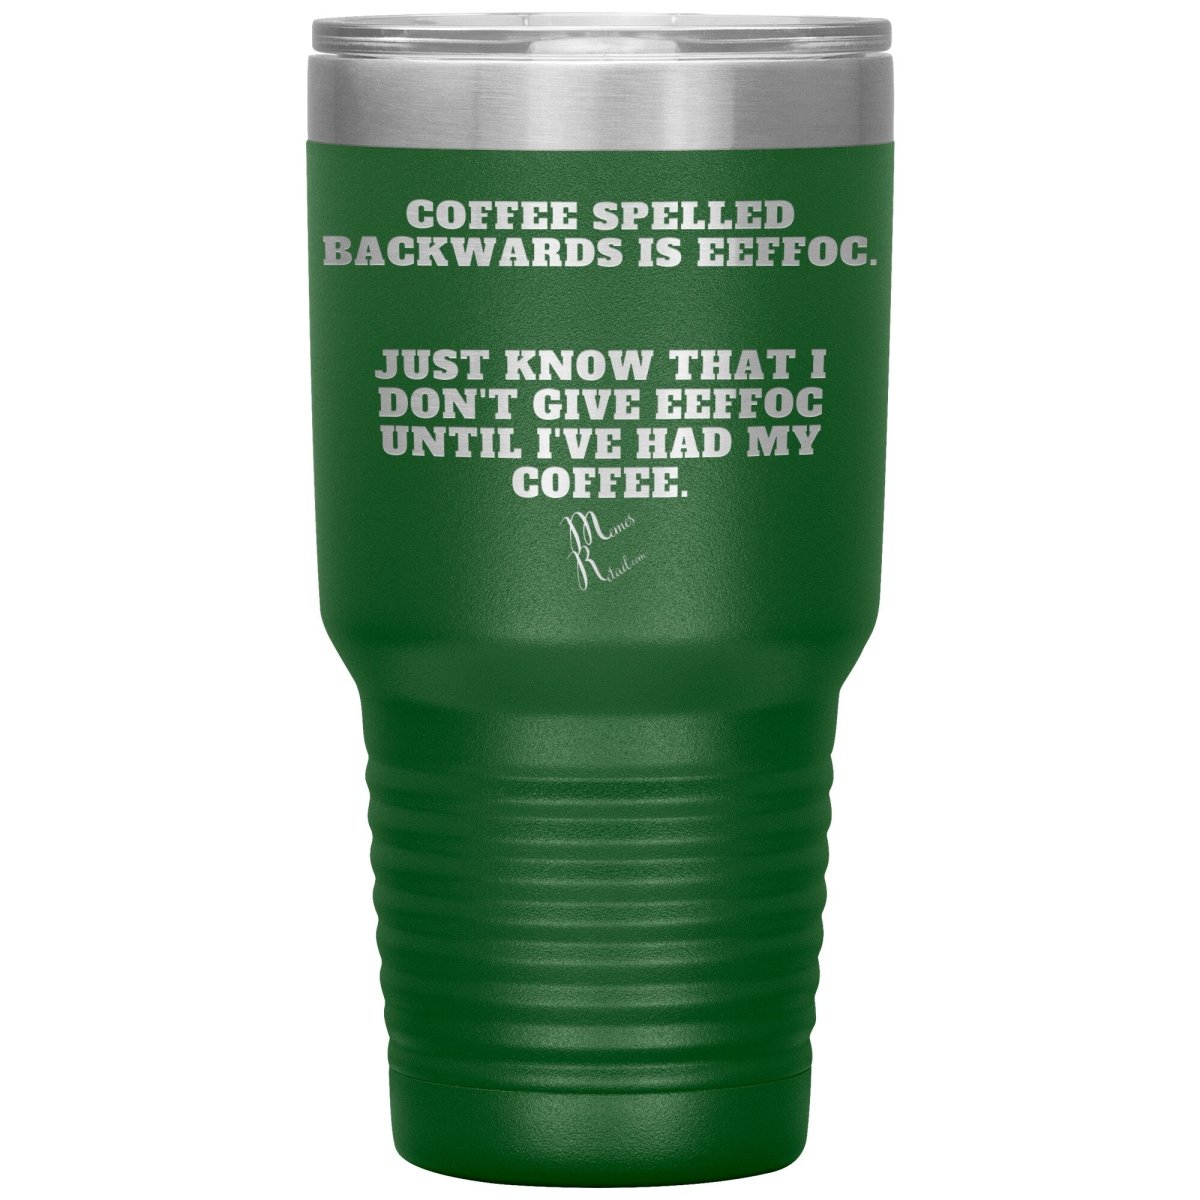 Coffee spelled backwards is eeffoc Tumblers, 30oz Insulated Tumbler / Green - MemesRetail.com